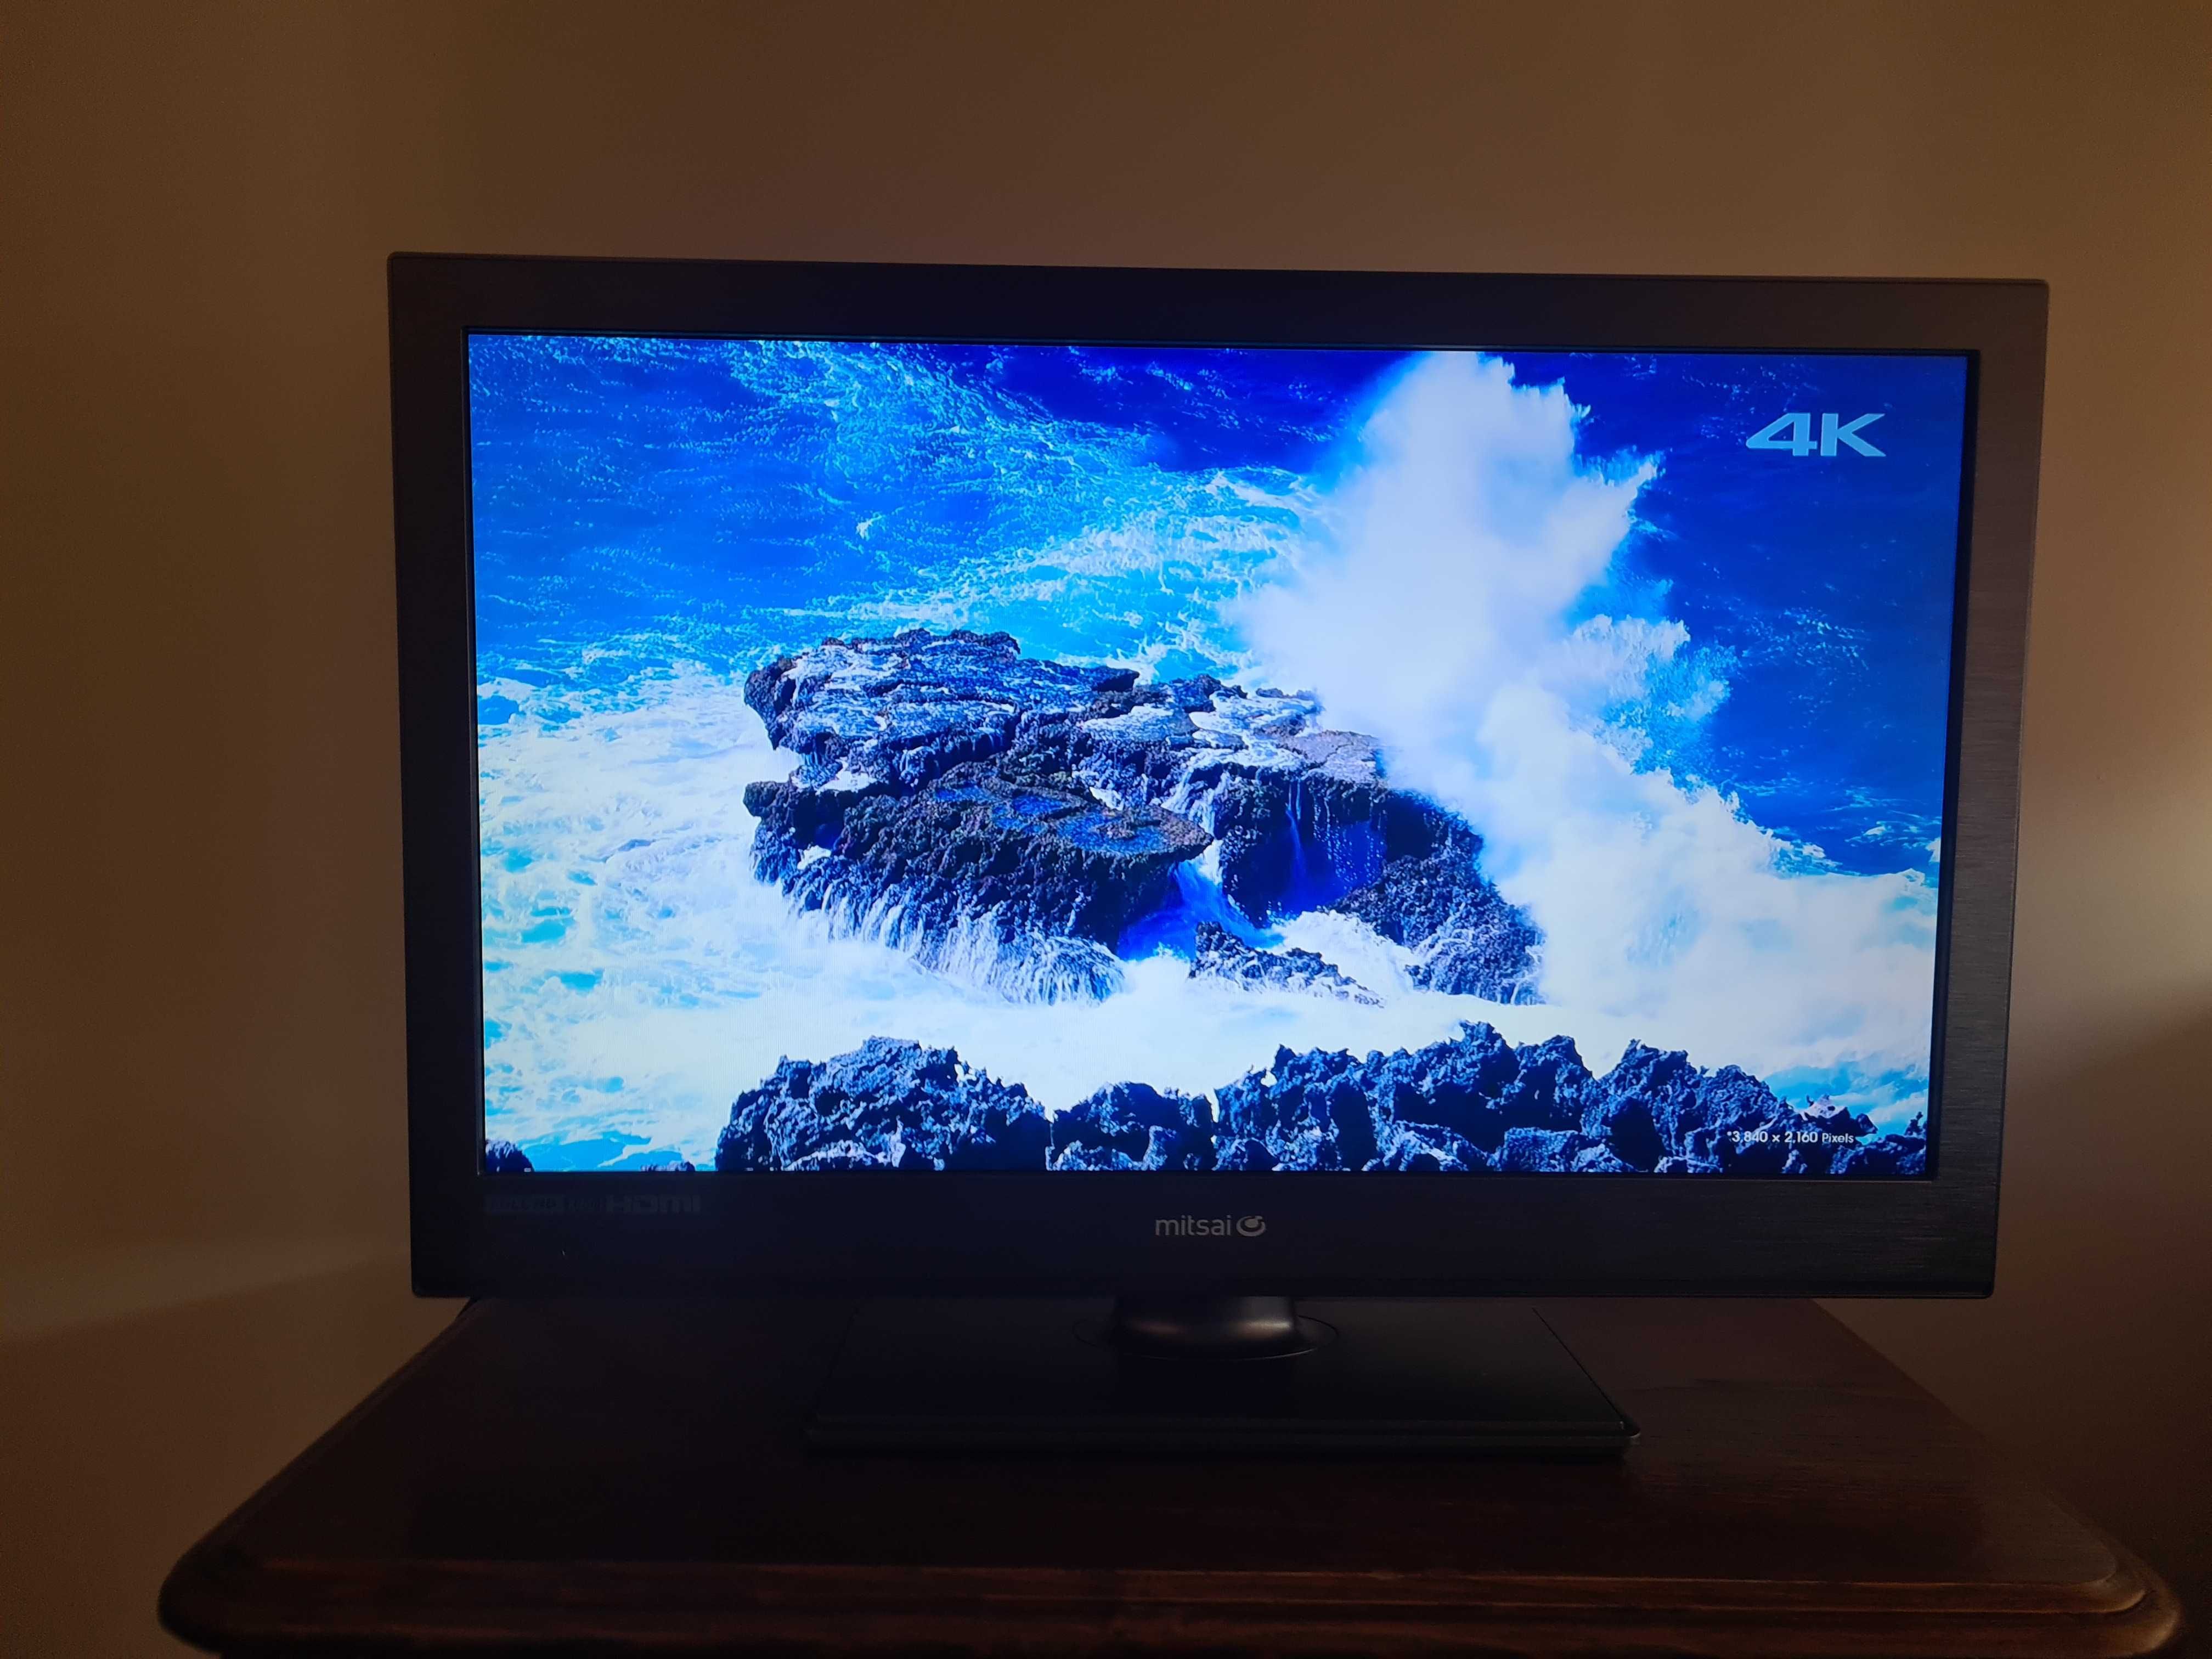 TV Mitsai 24VLM12 1080p